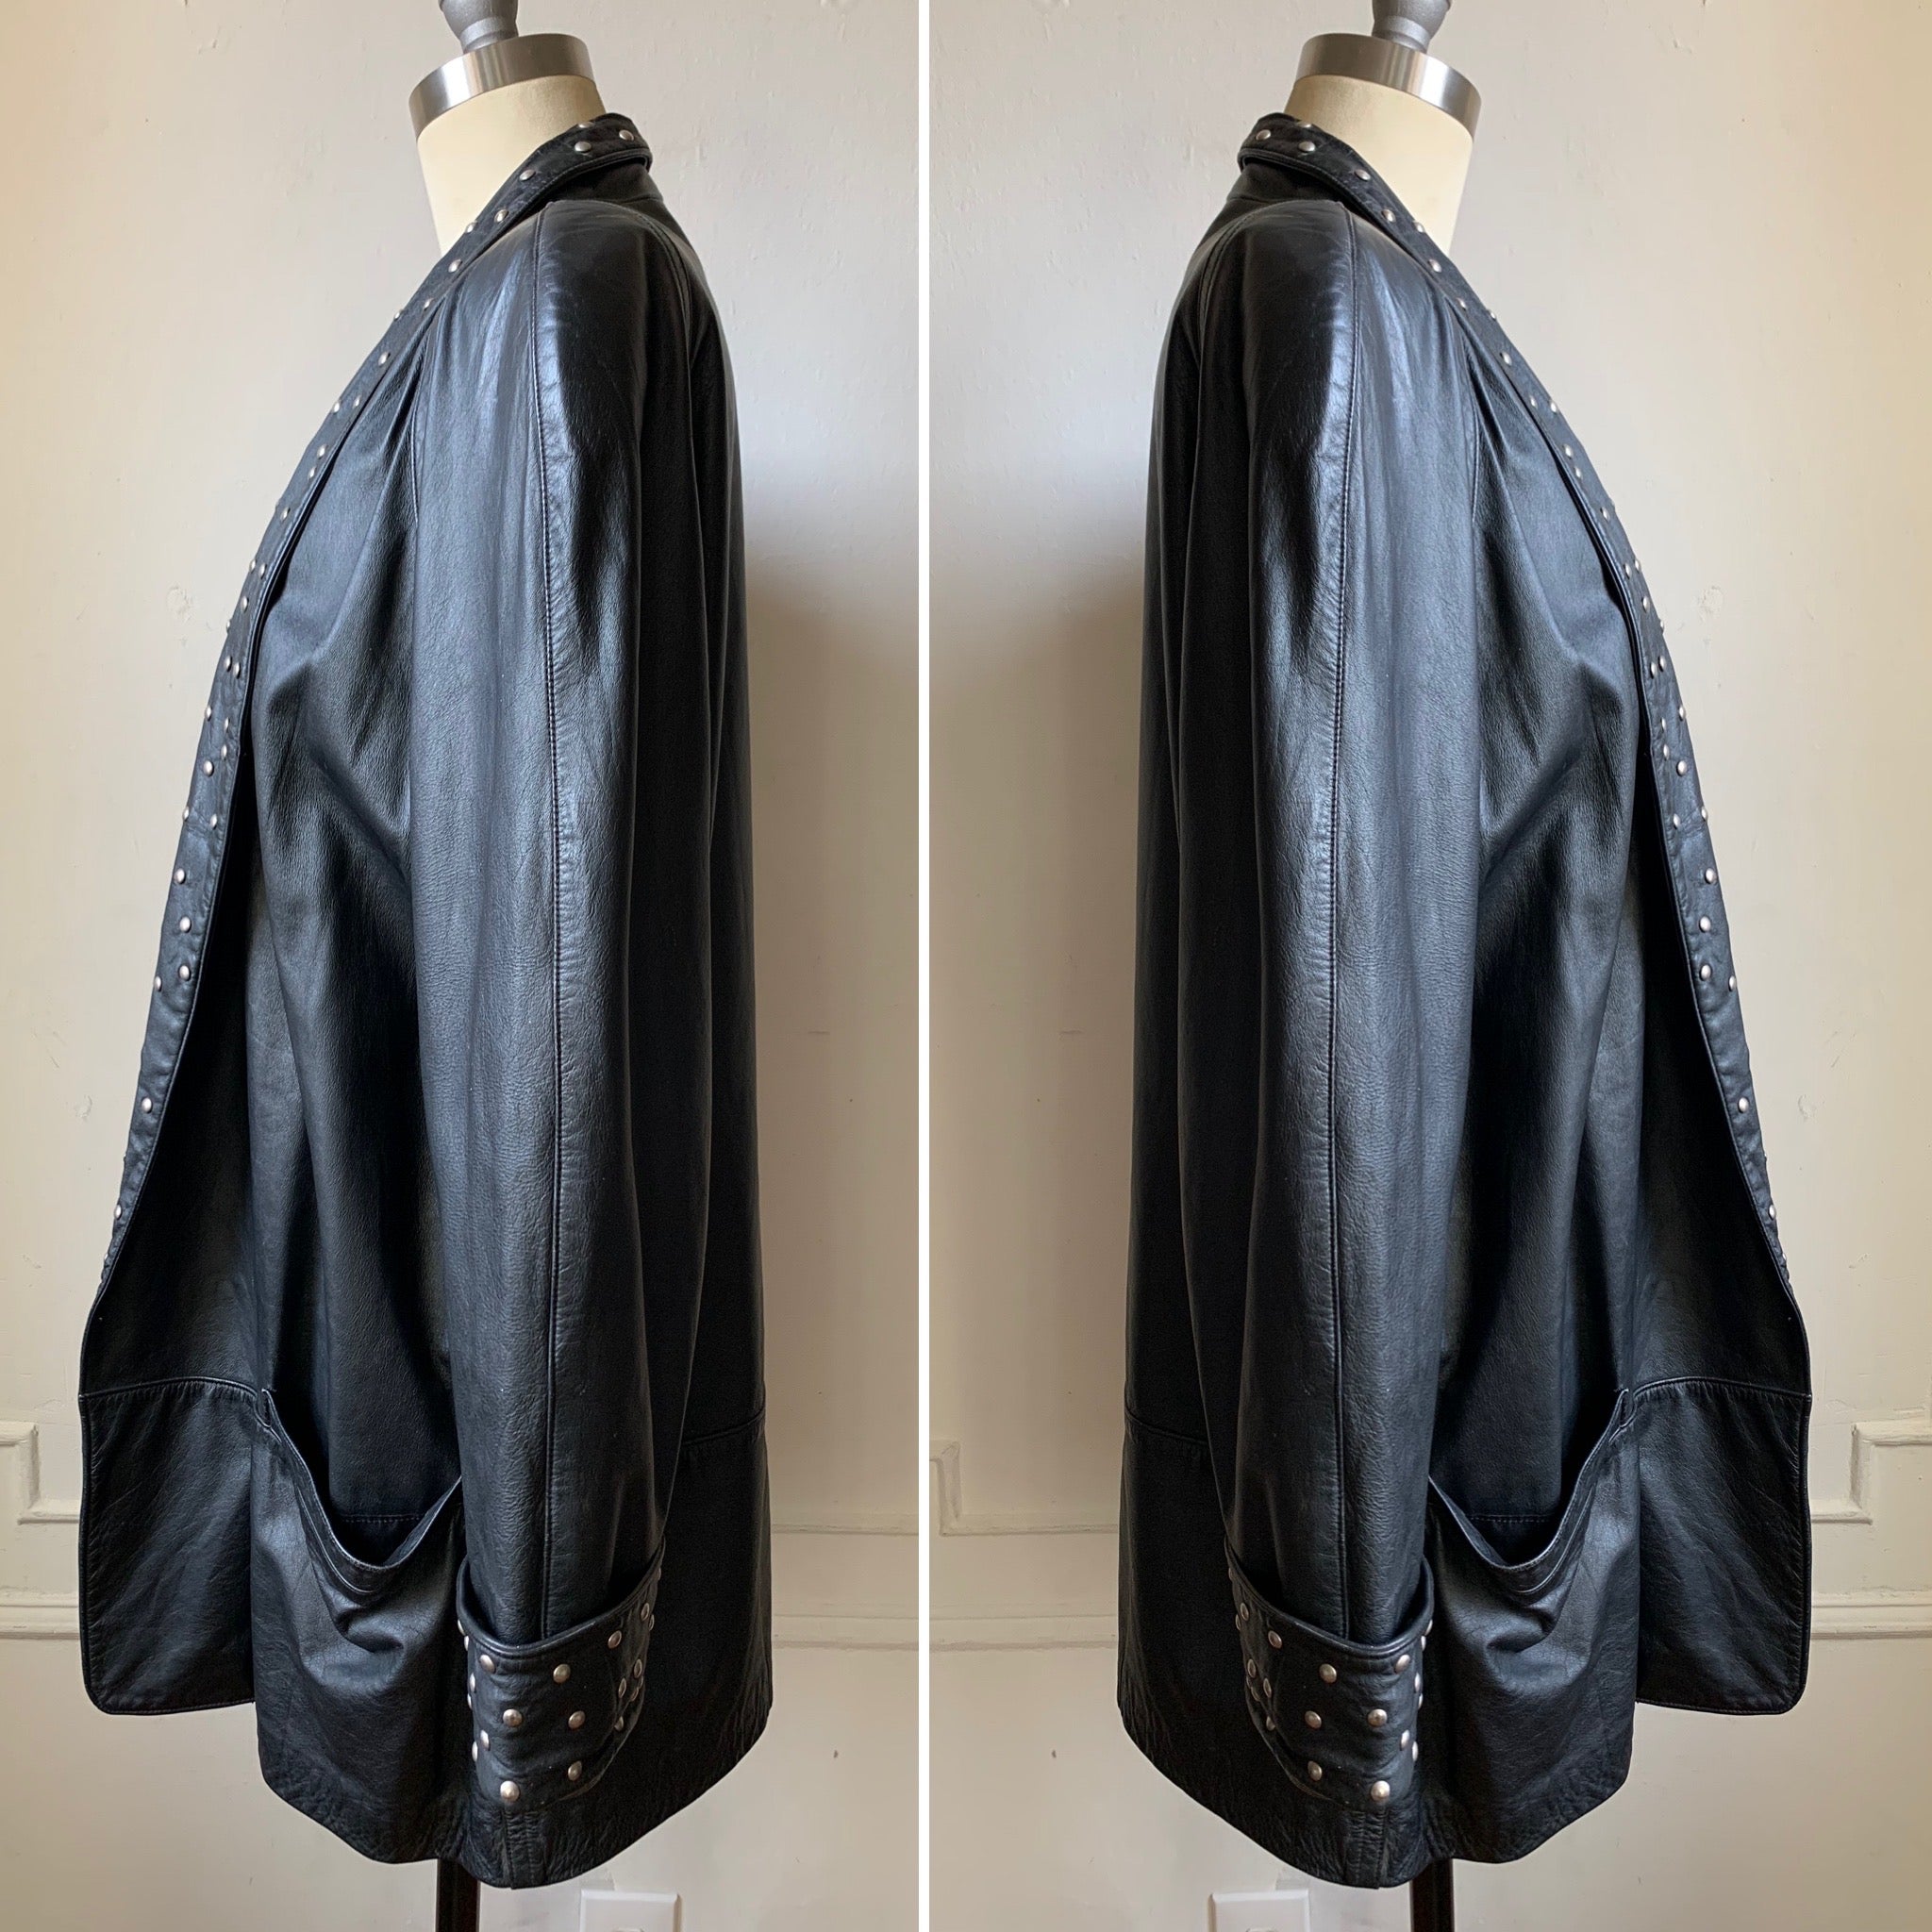 Vintage 80s Studded Black Blazer Leather Jacket